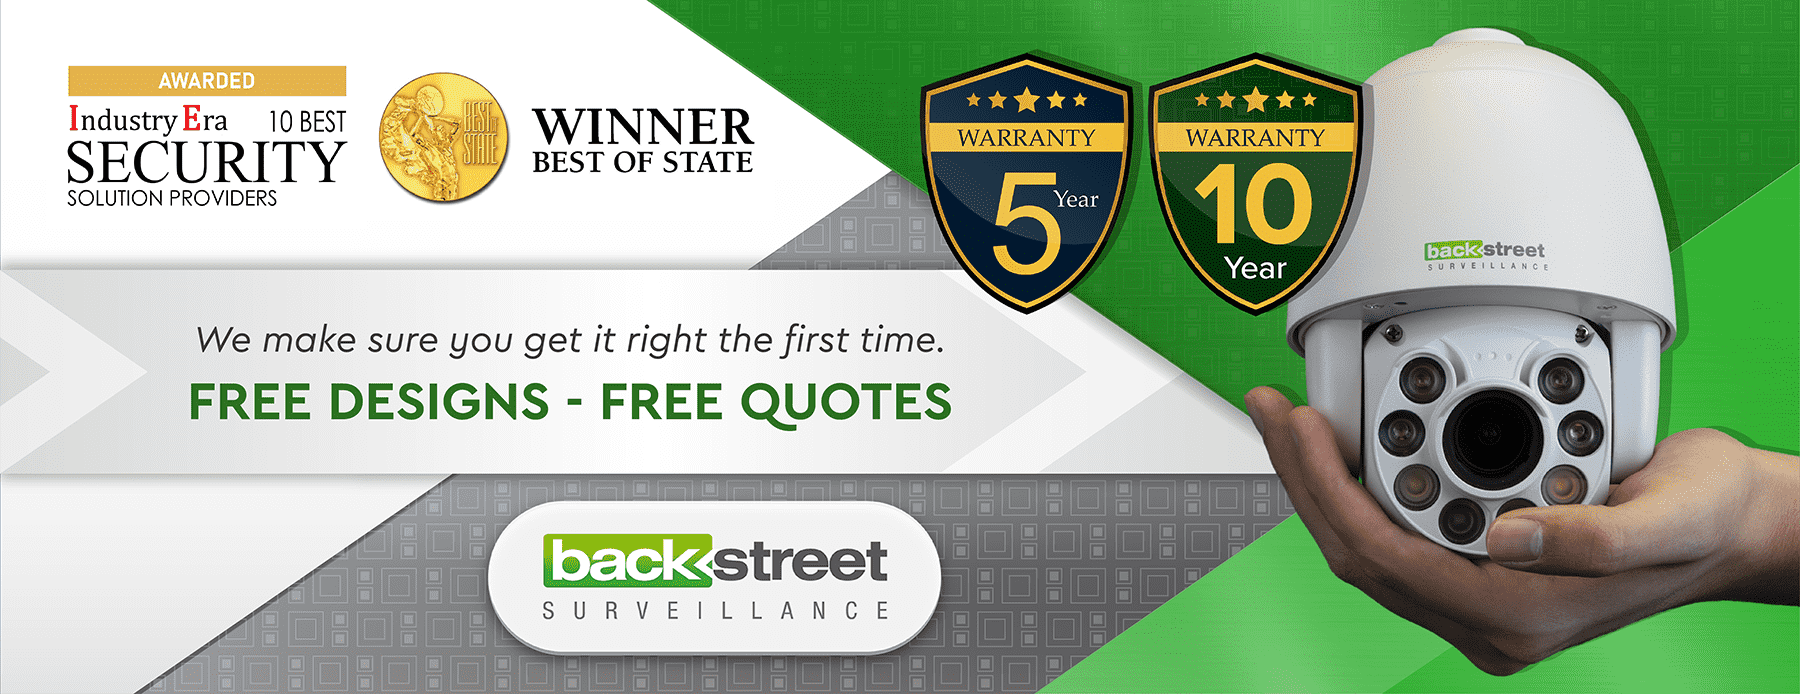 Backstreet Surveillance Quality Award